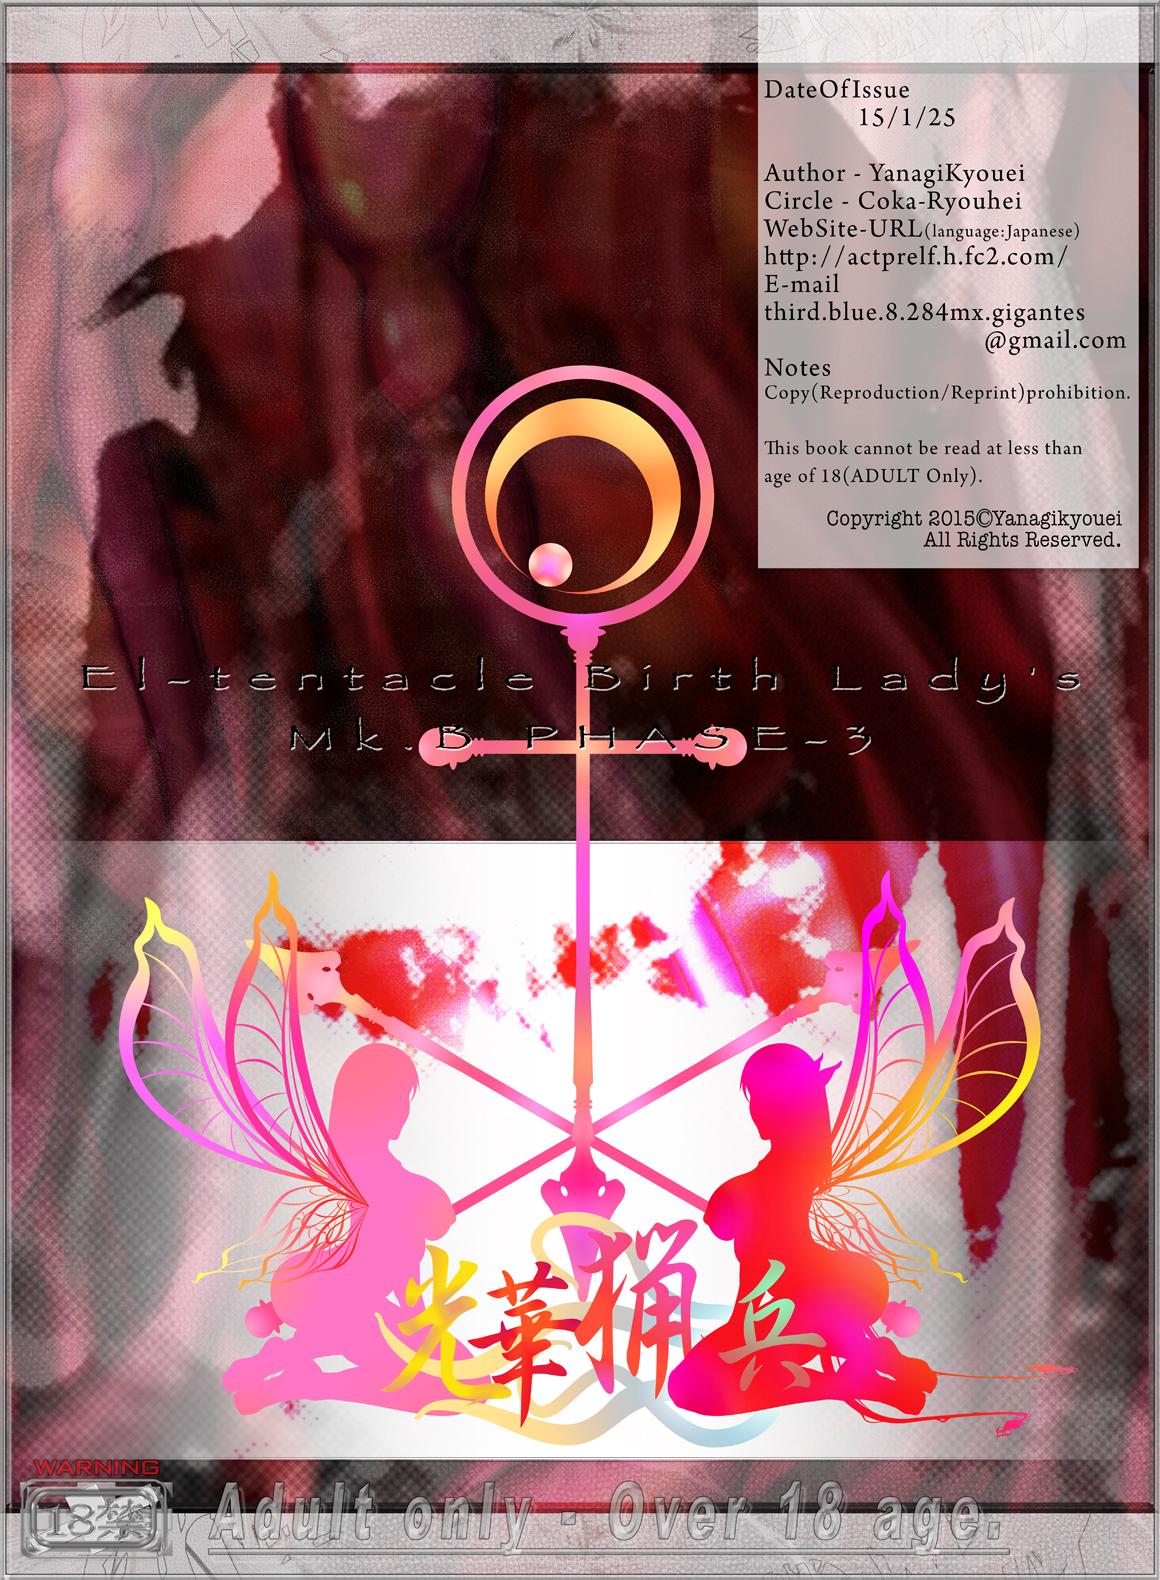 [Kouka Ryouhei (Yanagi Kyouei)] El-tentacle Birth Lady’s Mk.B PHASE-3 "Zen" [Digital] 38